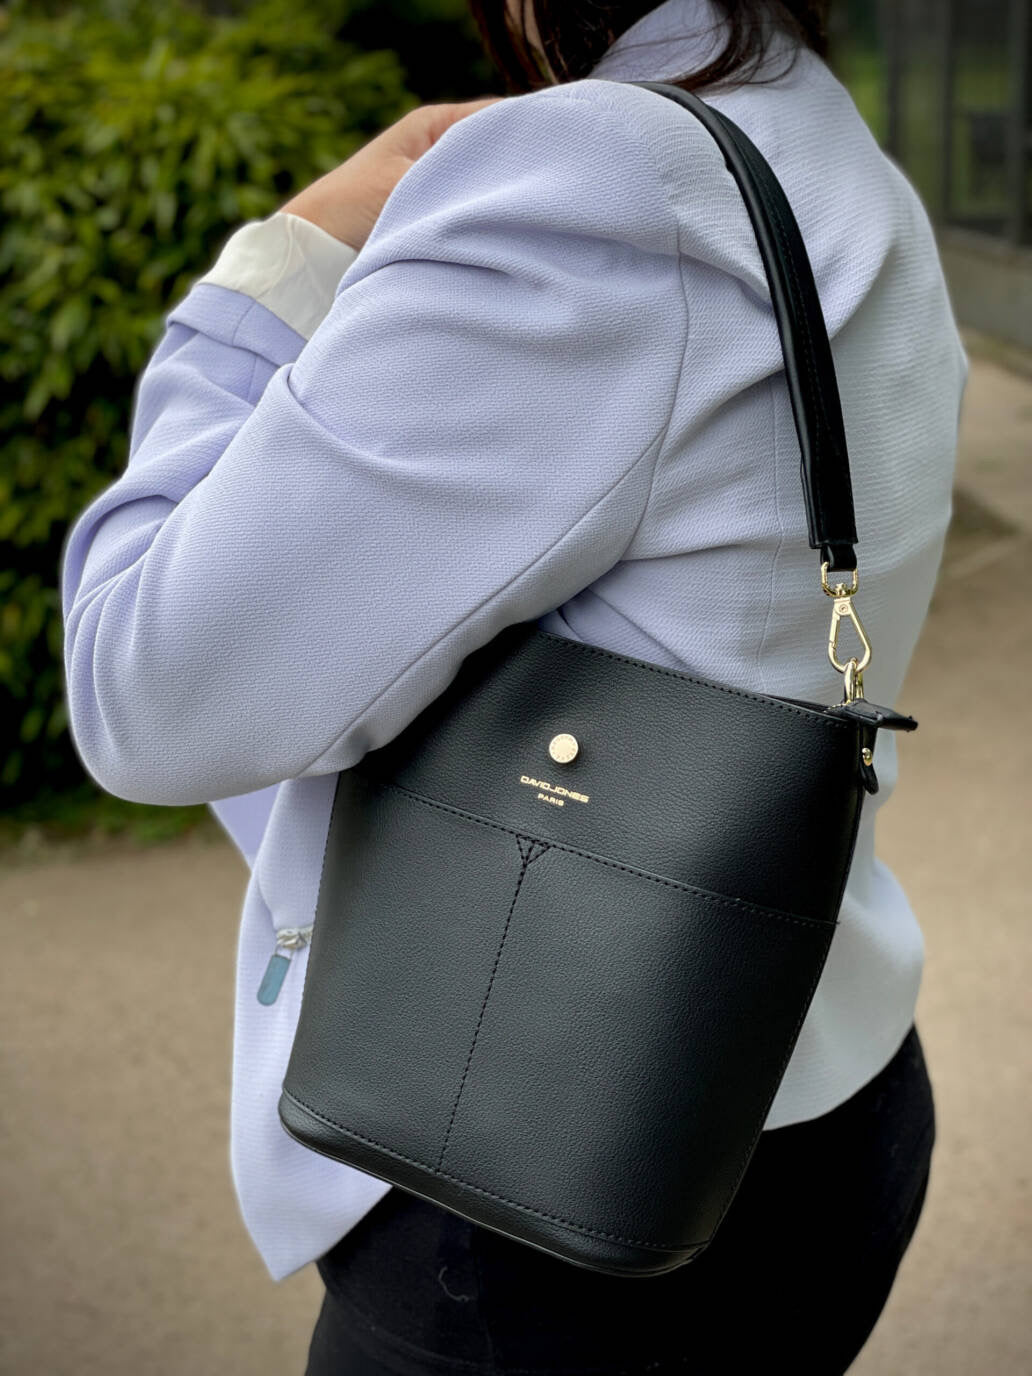 David Jones (Paris) Women's Tote Handbag.NEW WITH TAGS